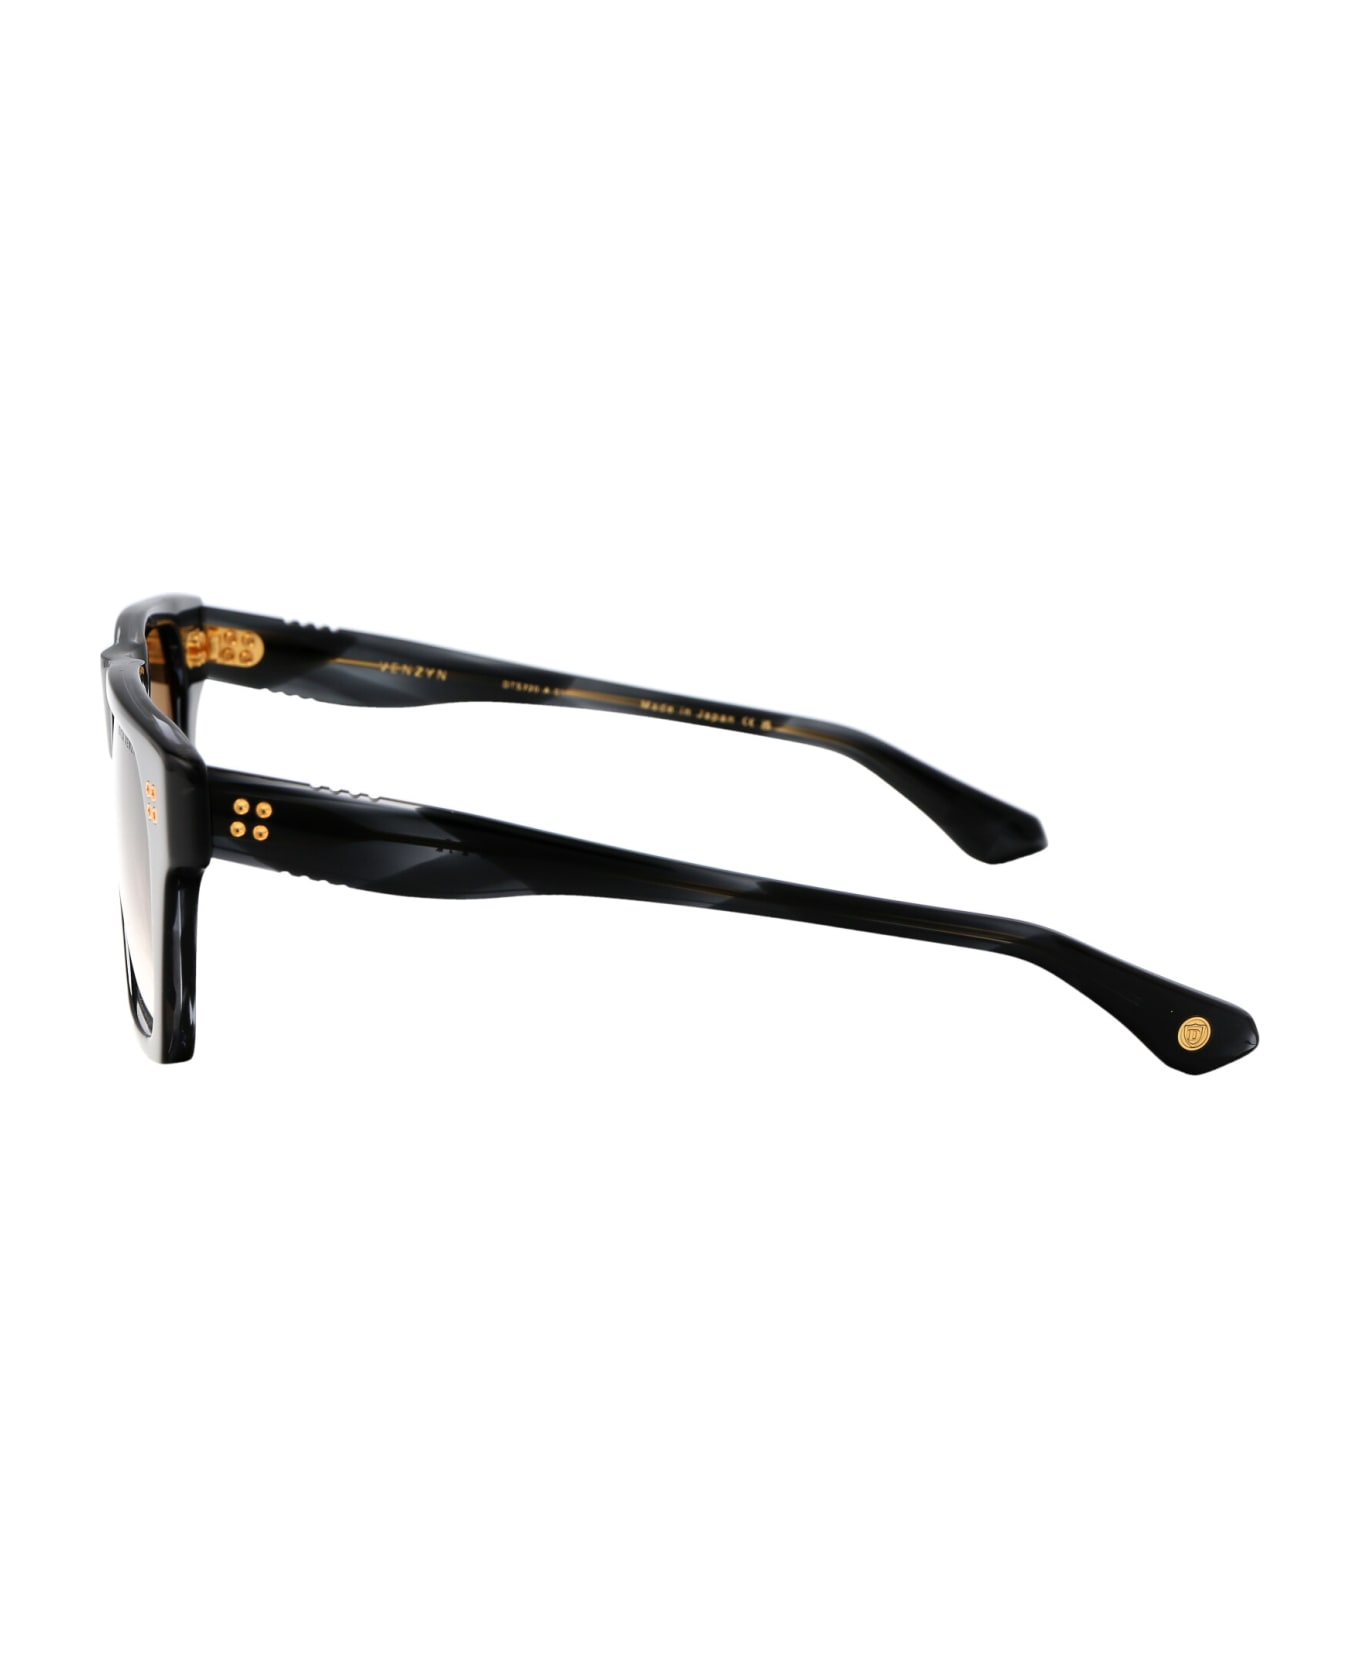 Dita Venzyn Sunglasses - 01 INK SWIRL W/ DARK BROWN TO CLEAR GRADIENT